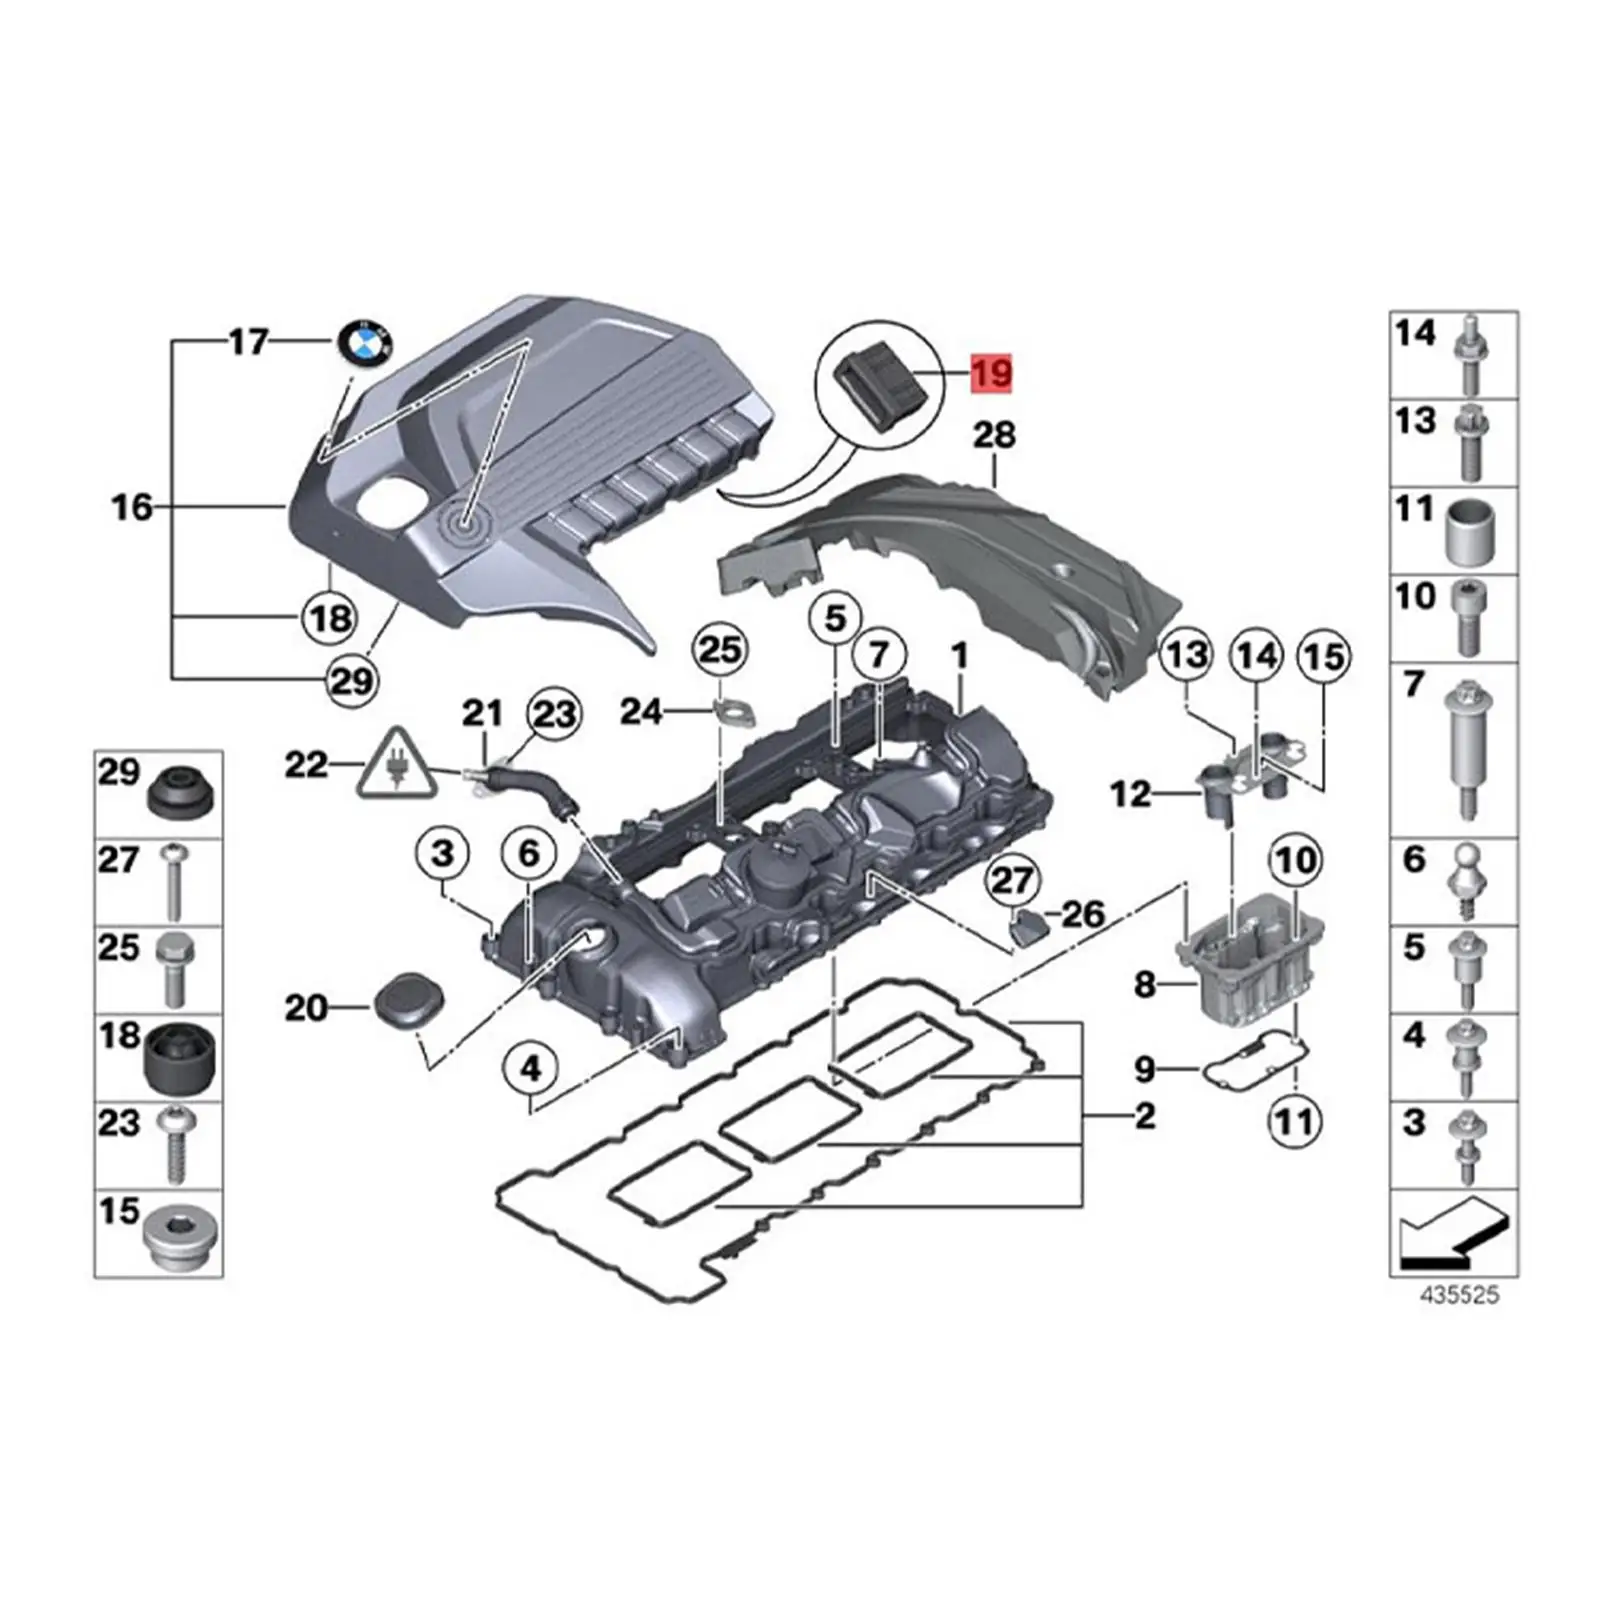 Radiator Upper Rubber Mount Repair Parts 17111712911 for BMW E32 735i E38 740il E34 540i E39 540i E34 530i